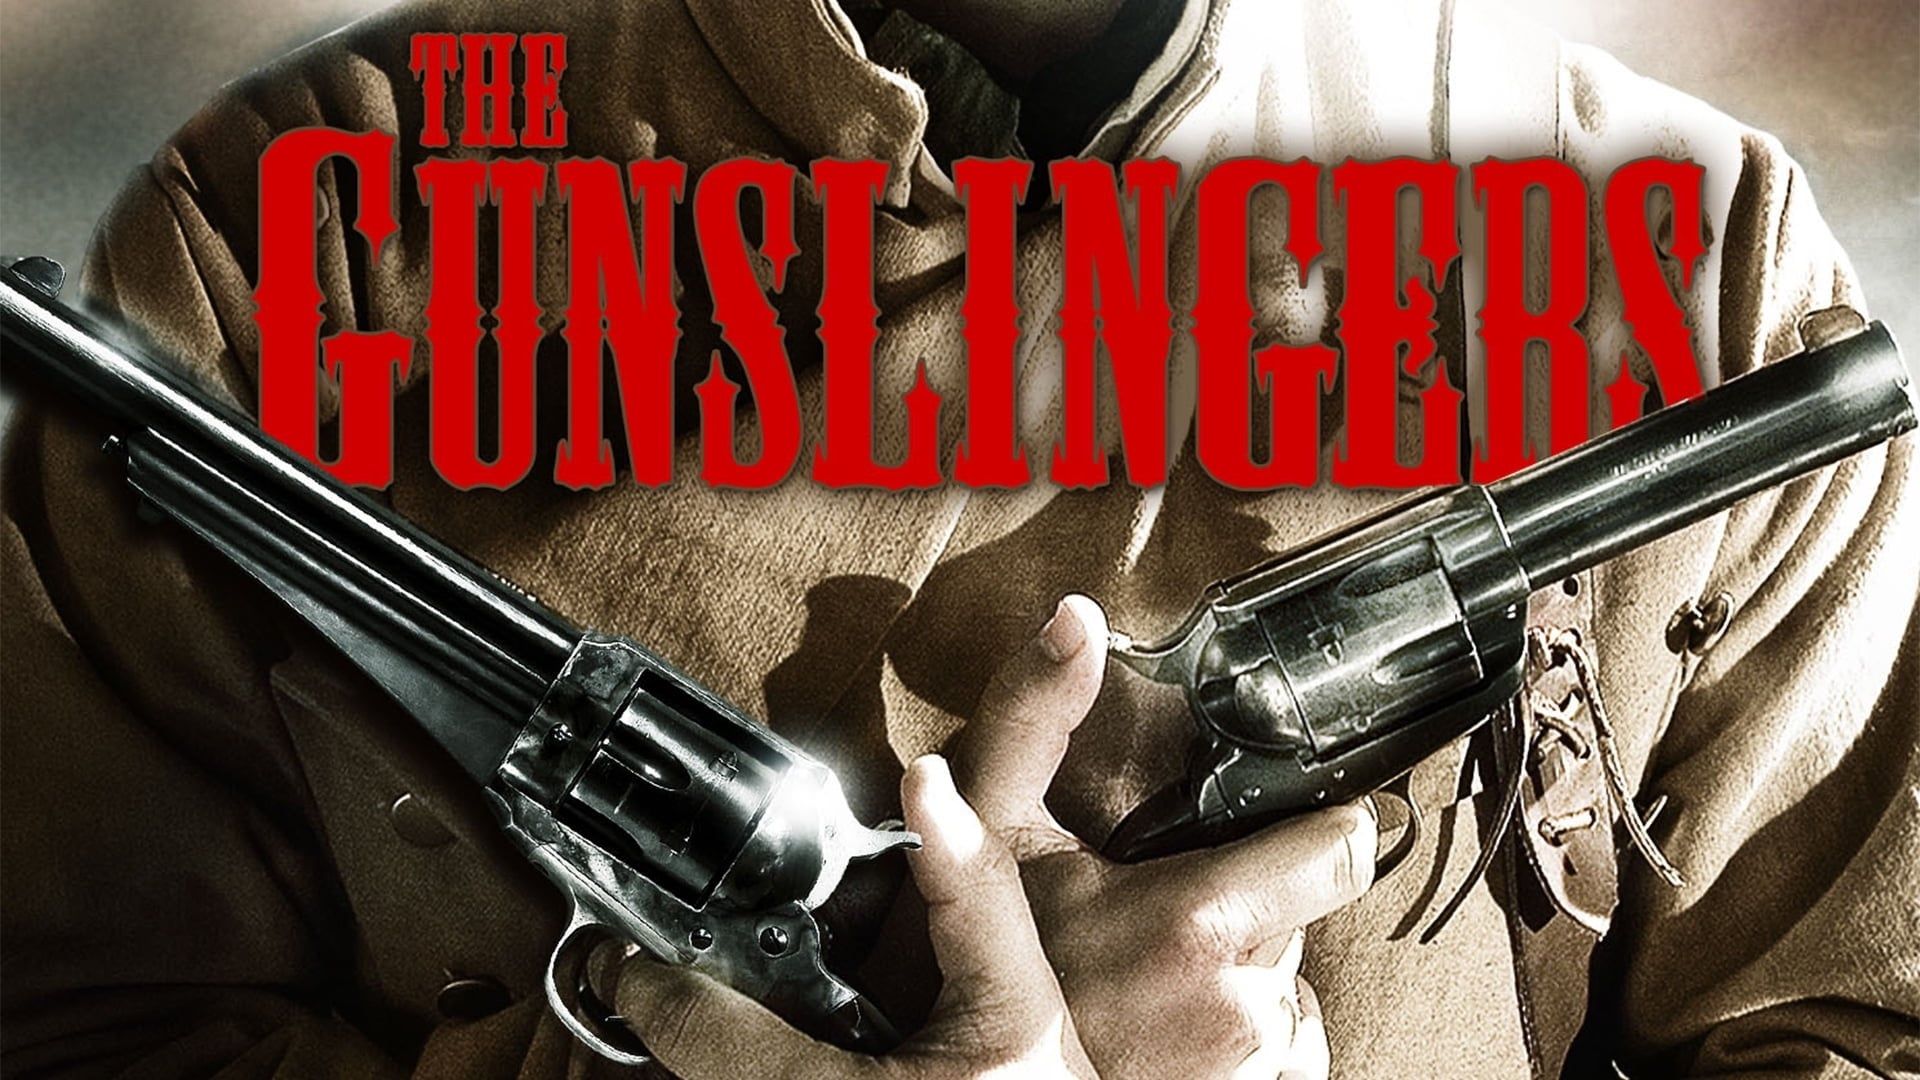 The Gunslingers background